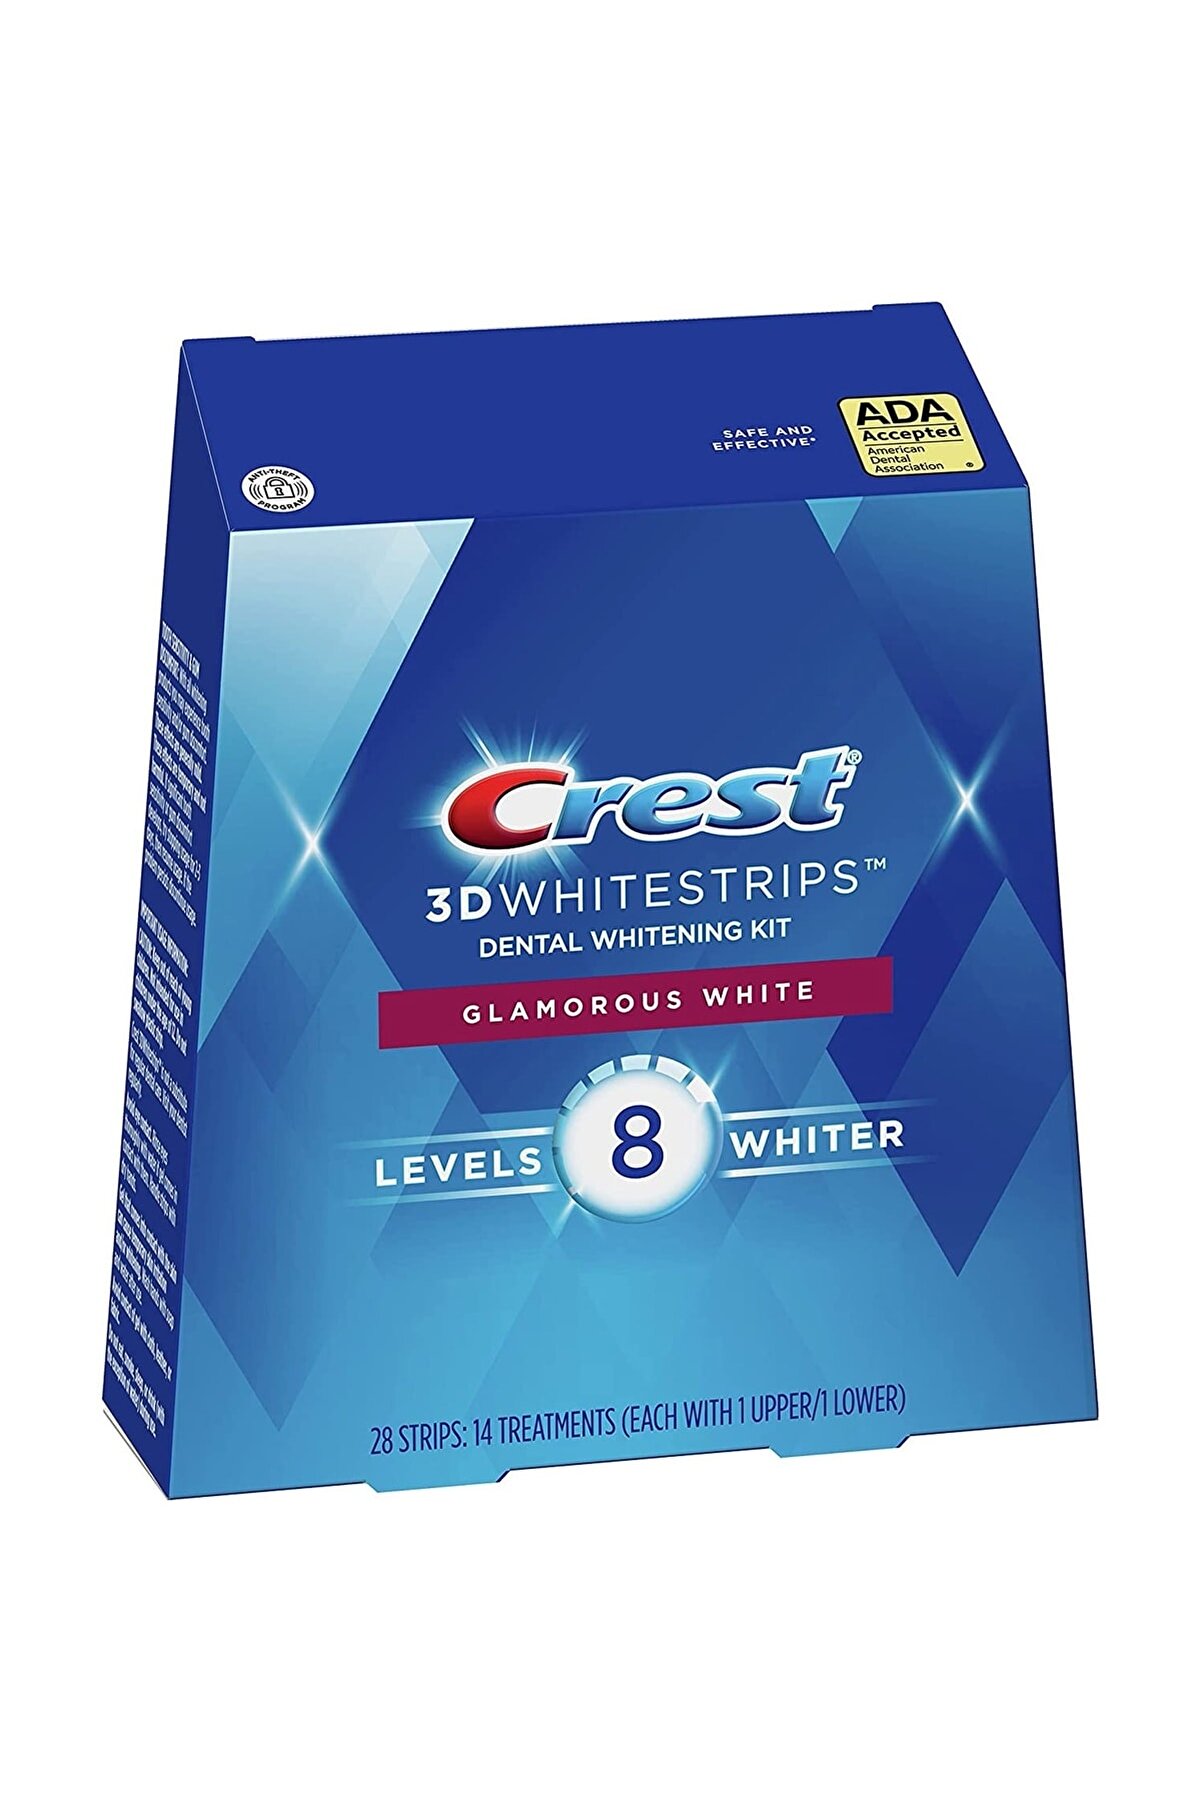 CREST 3d Whitestrips Glamorus White 28 Strips